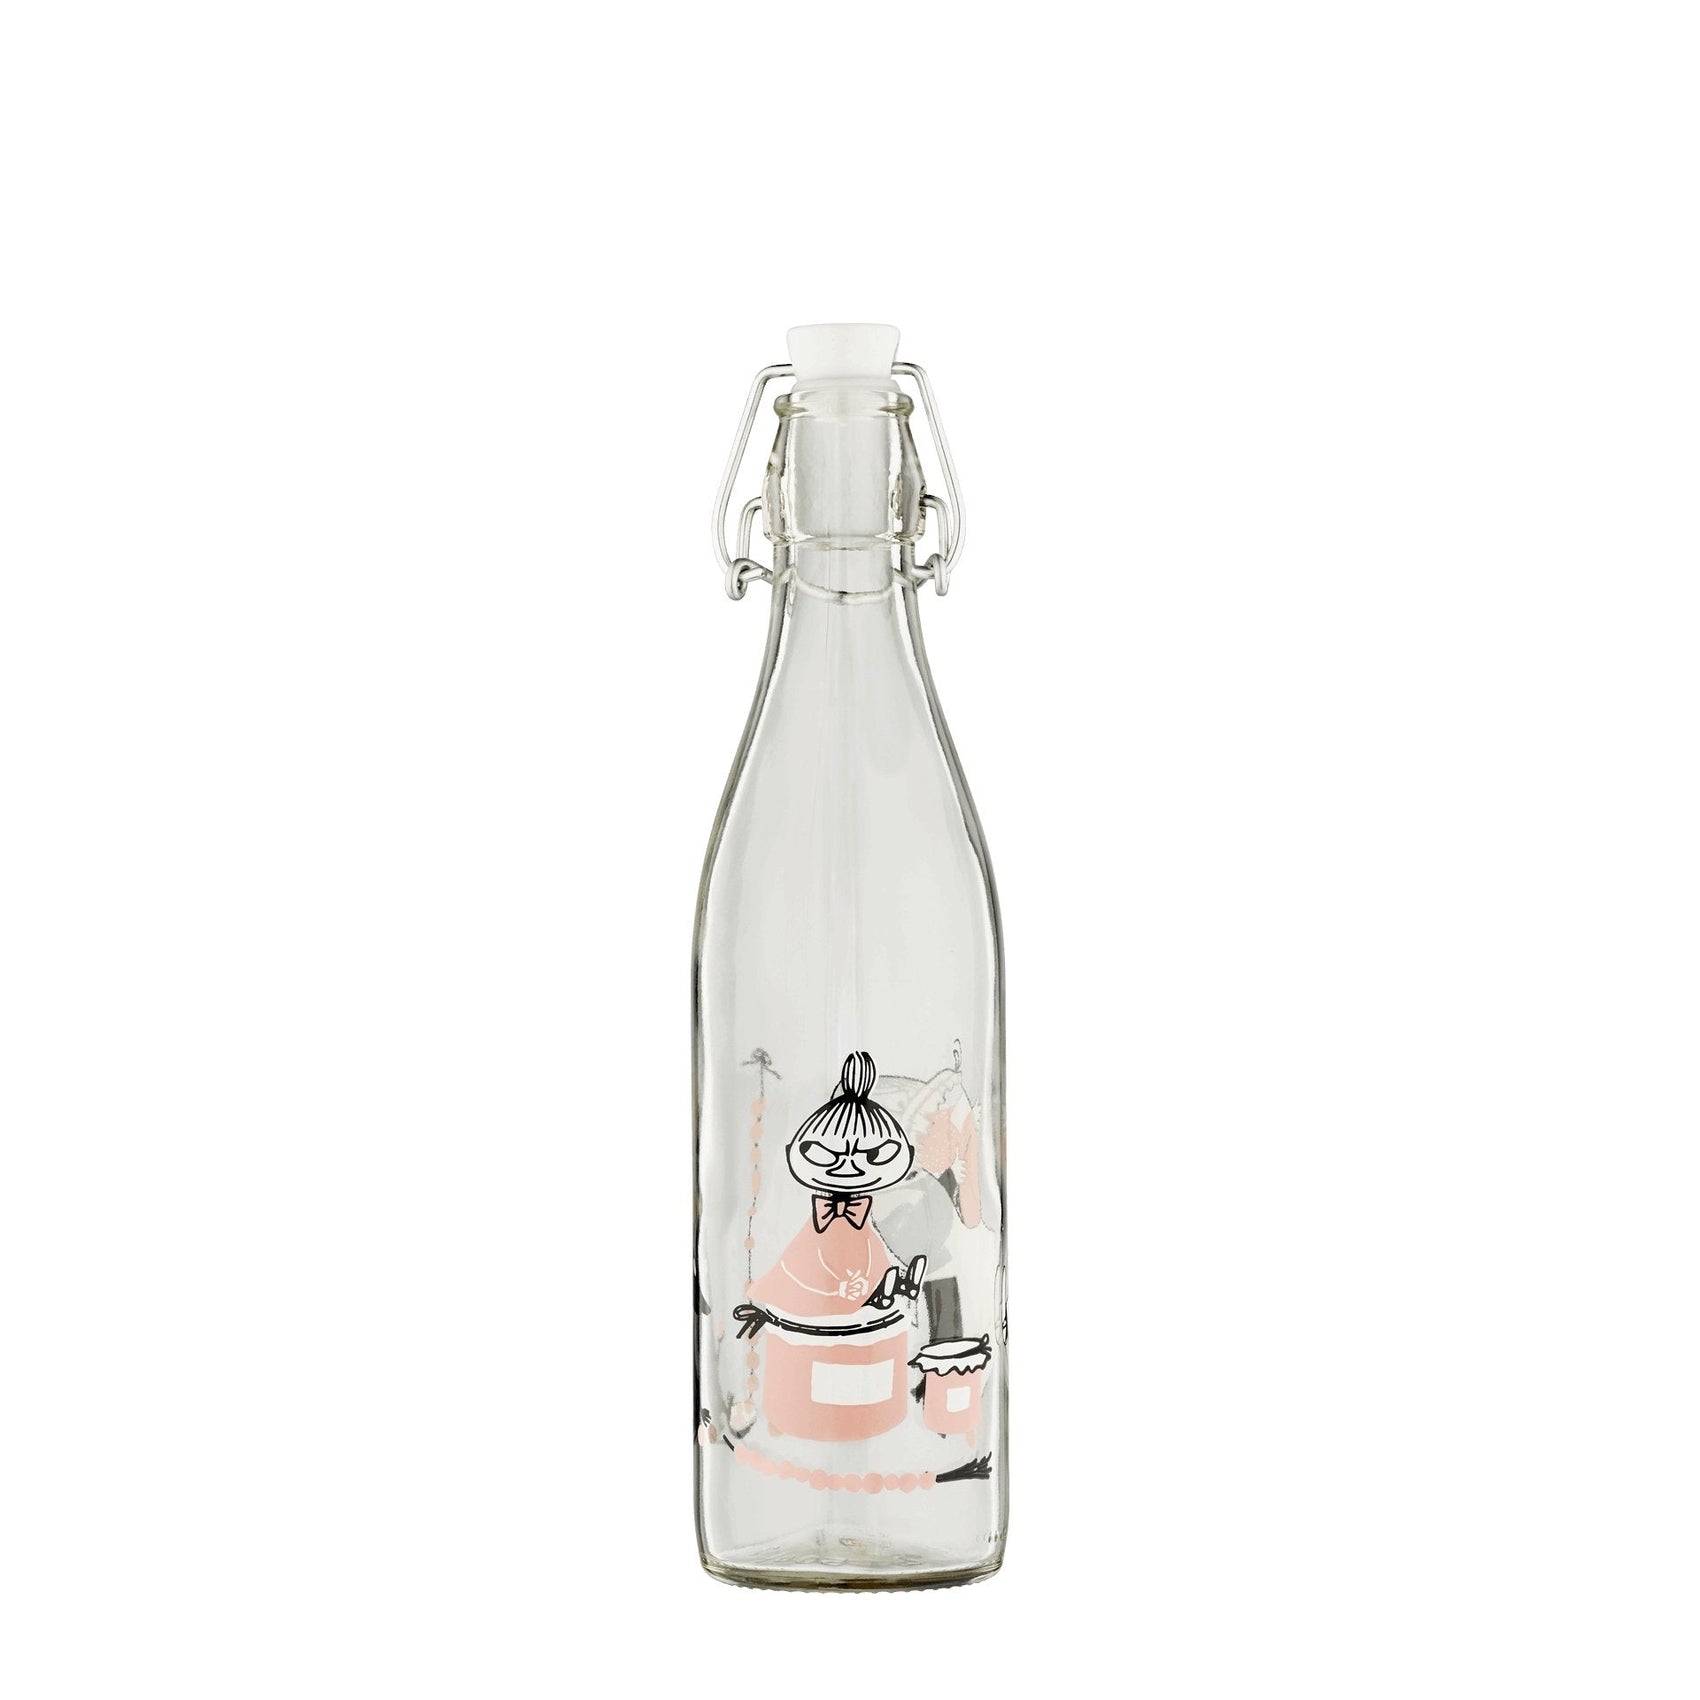 Moomin glass bottle 0.5l Marmalade